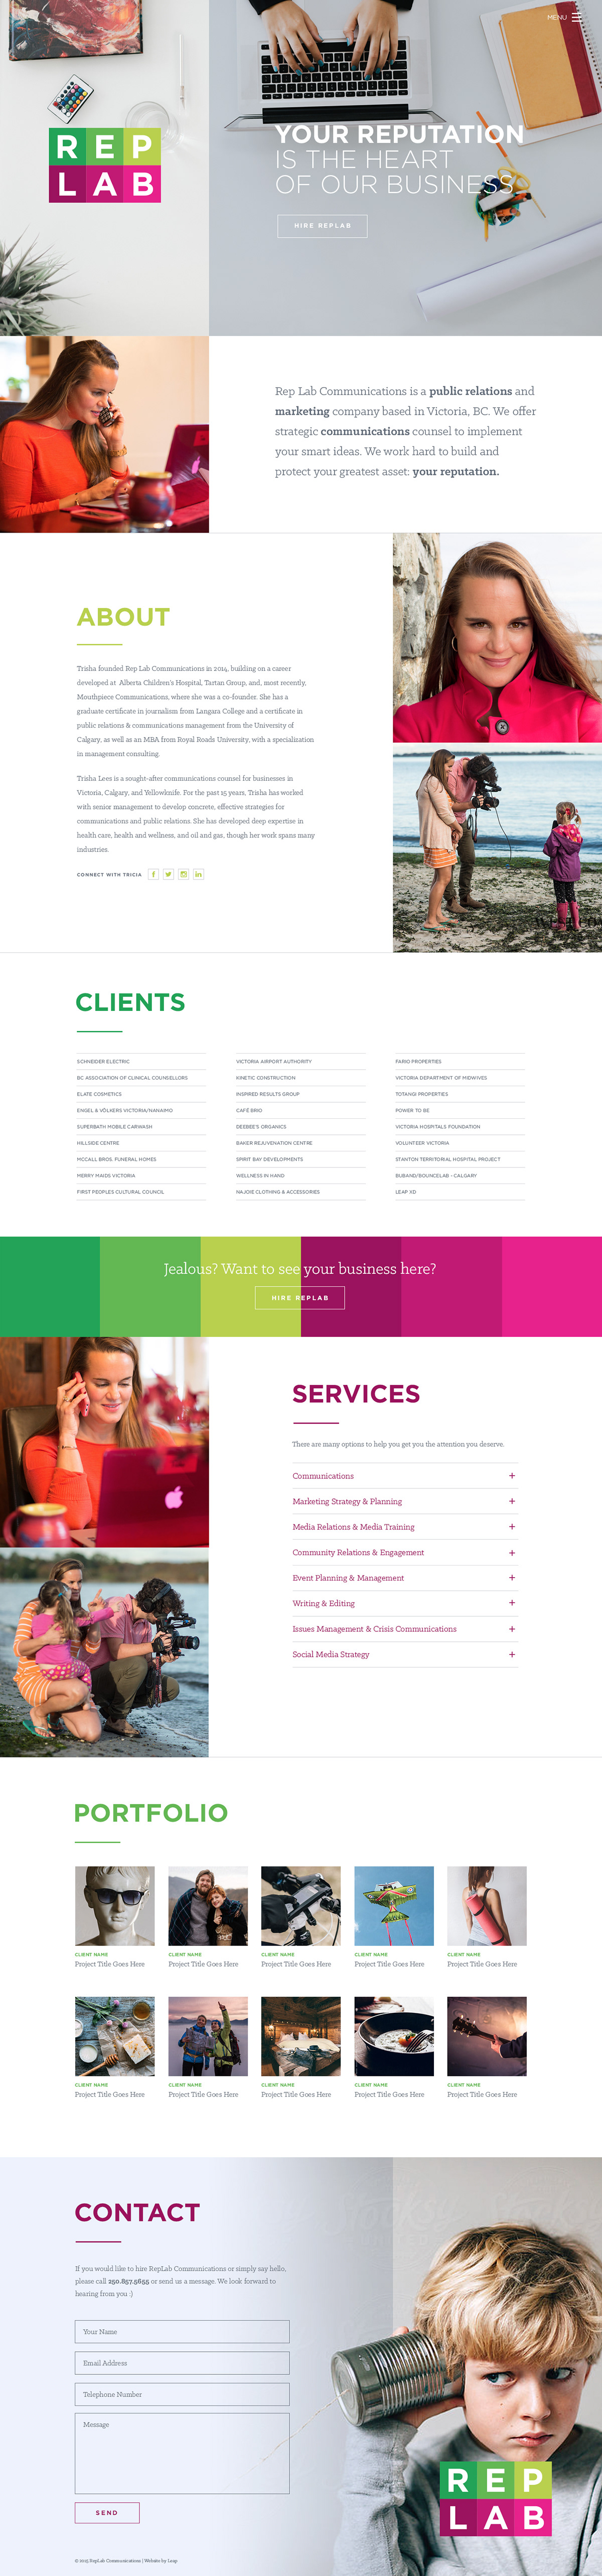 Website one-page Responsive fullscreen wordpress Theme pr marketing   personal business